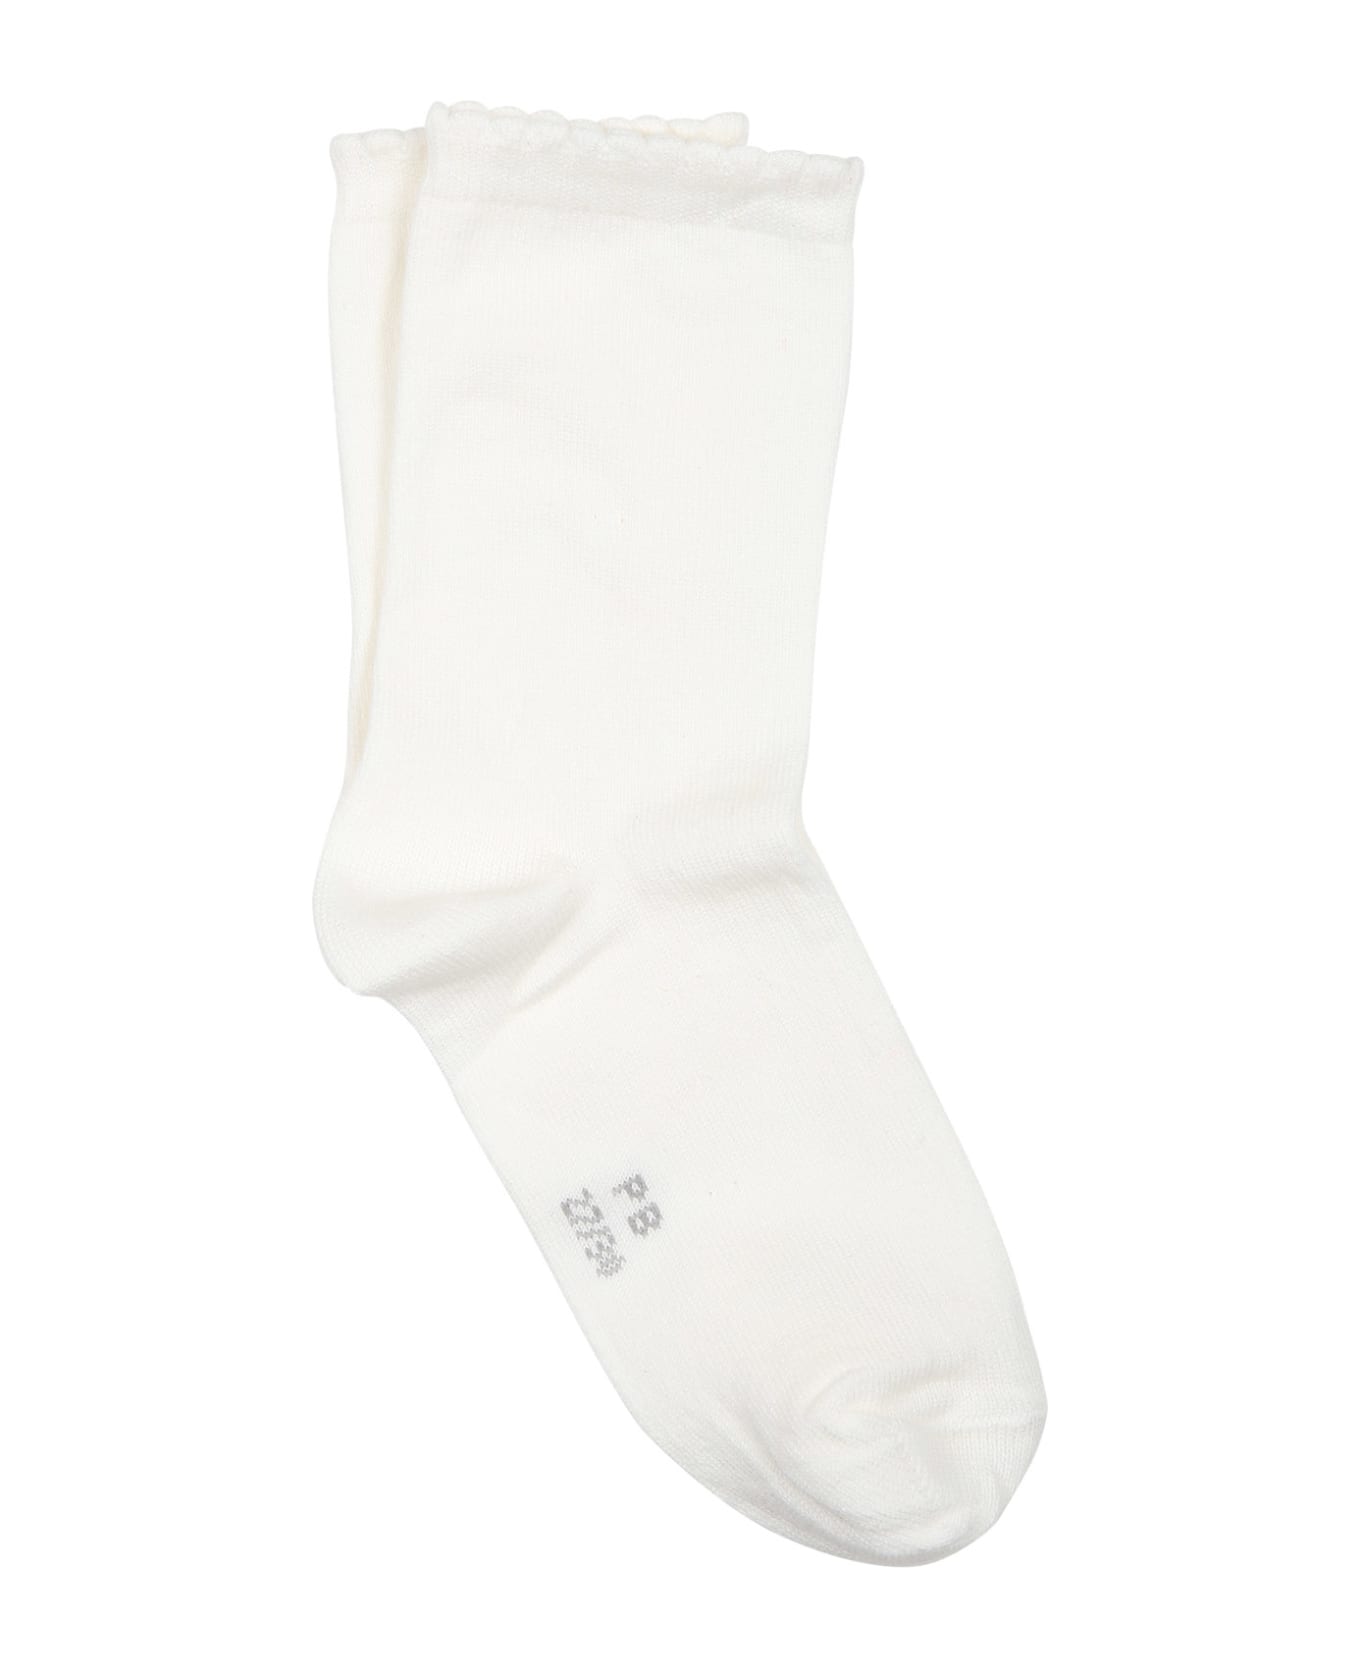 Petit Bateau Set Of Socks For Girl With Hearts - White アンダーウェア